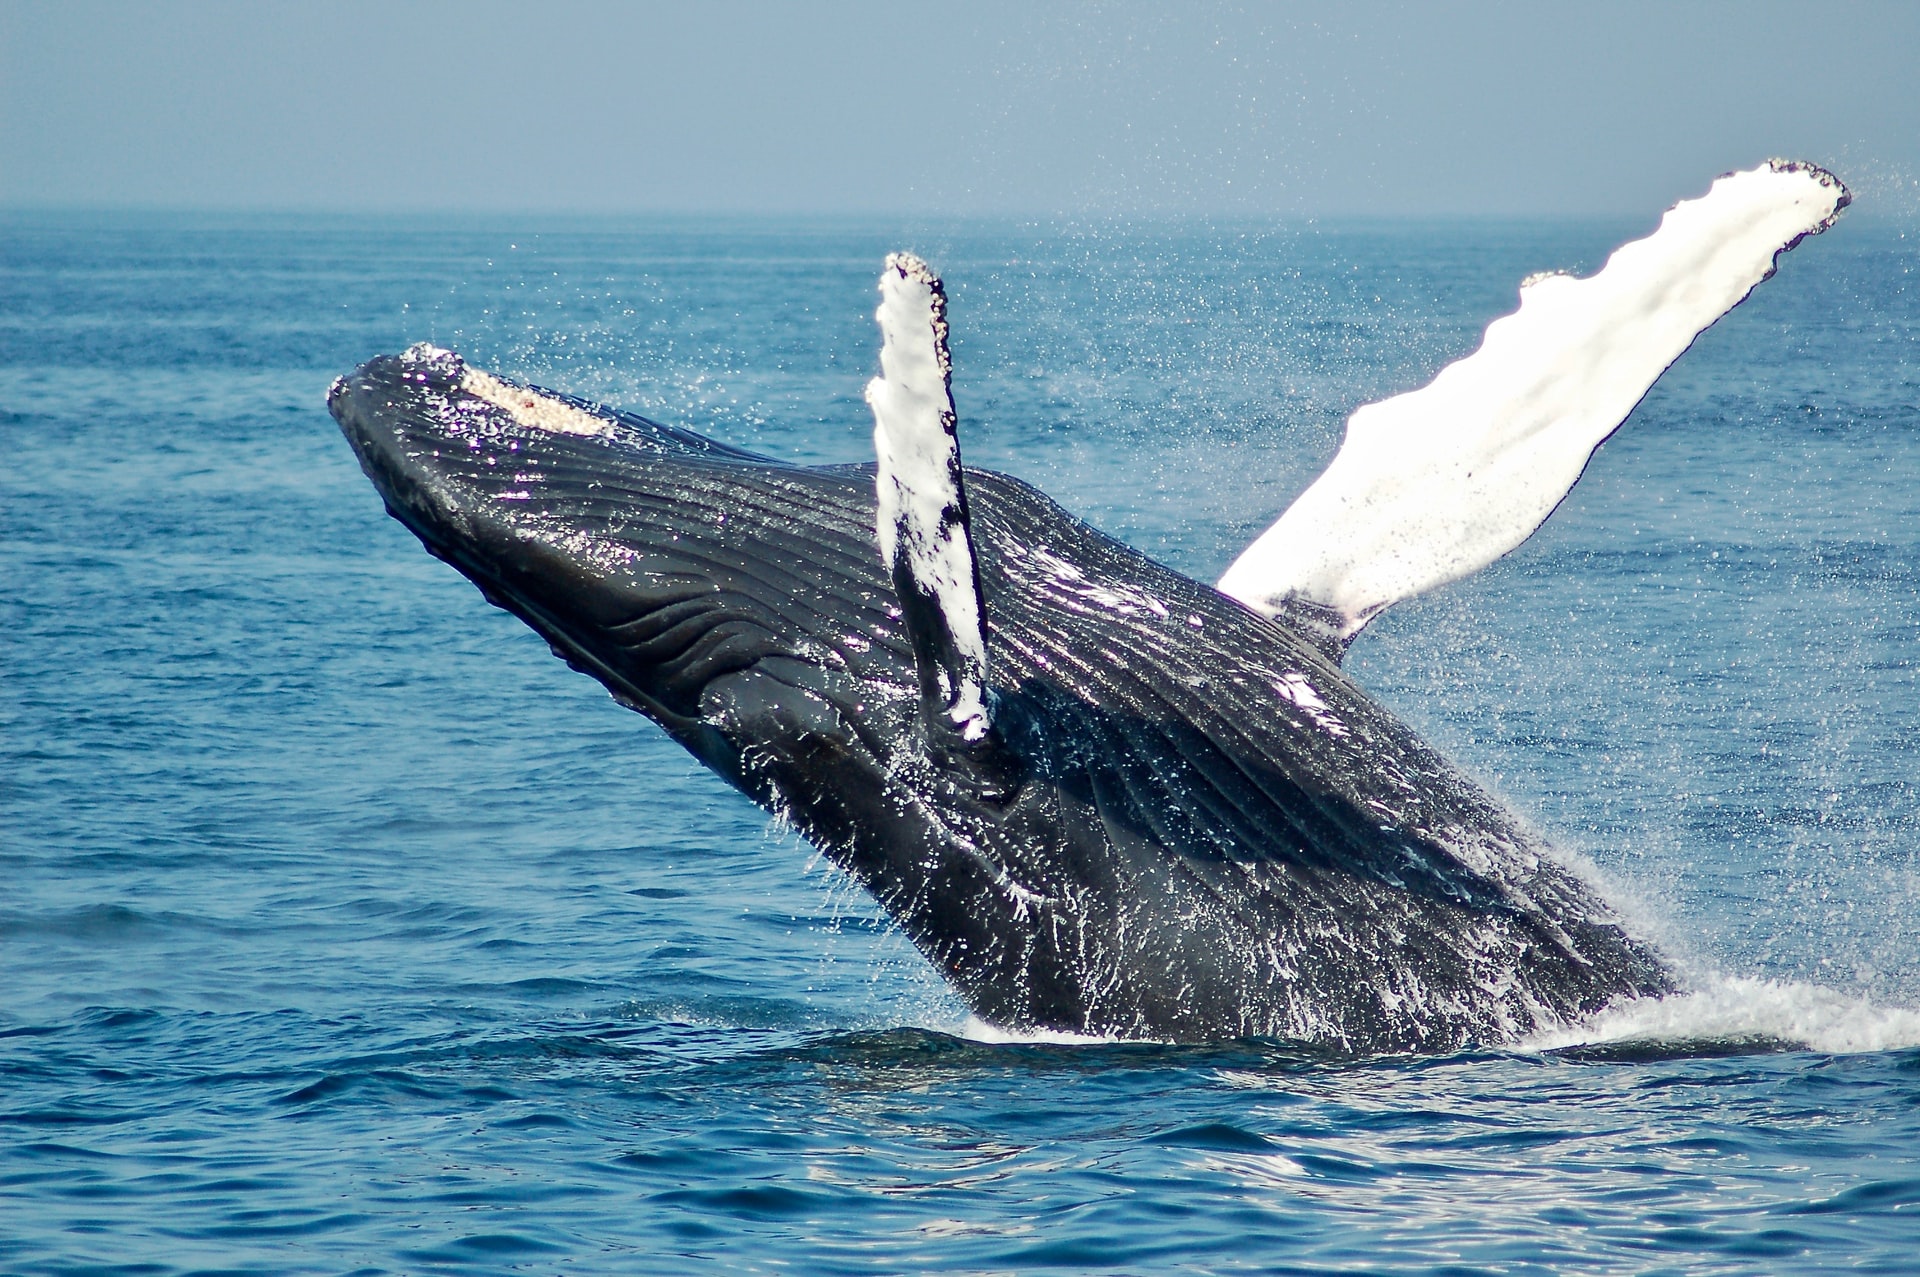 BBC: Iceland pilot whales: Dozens of dead mammals found beached